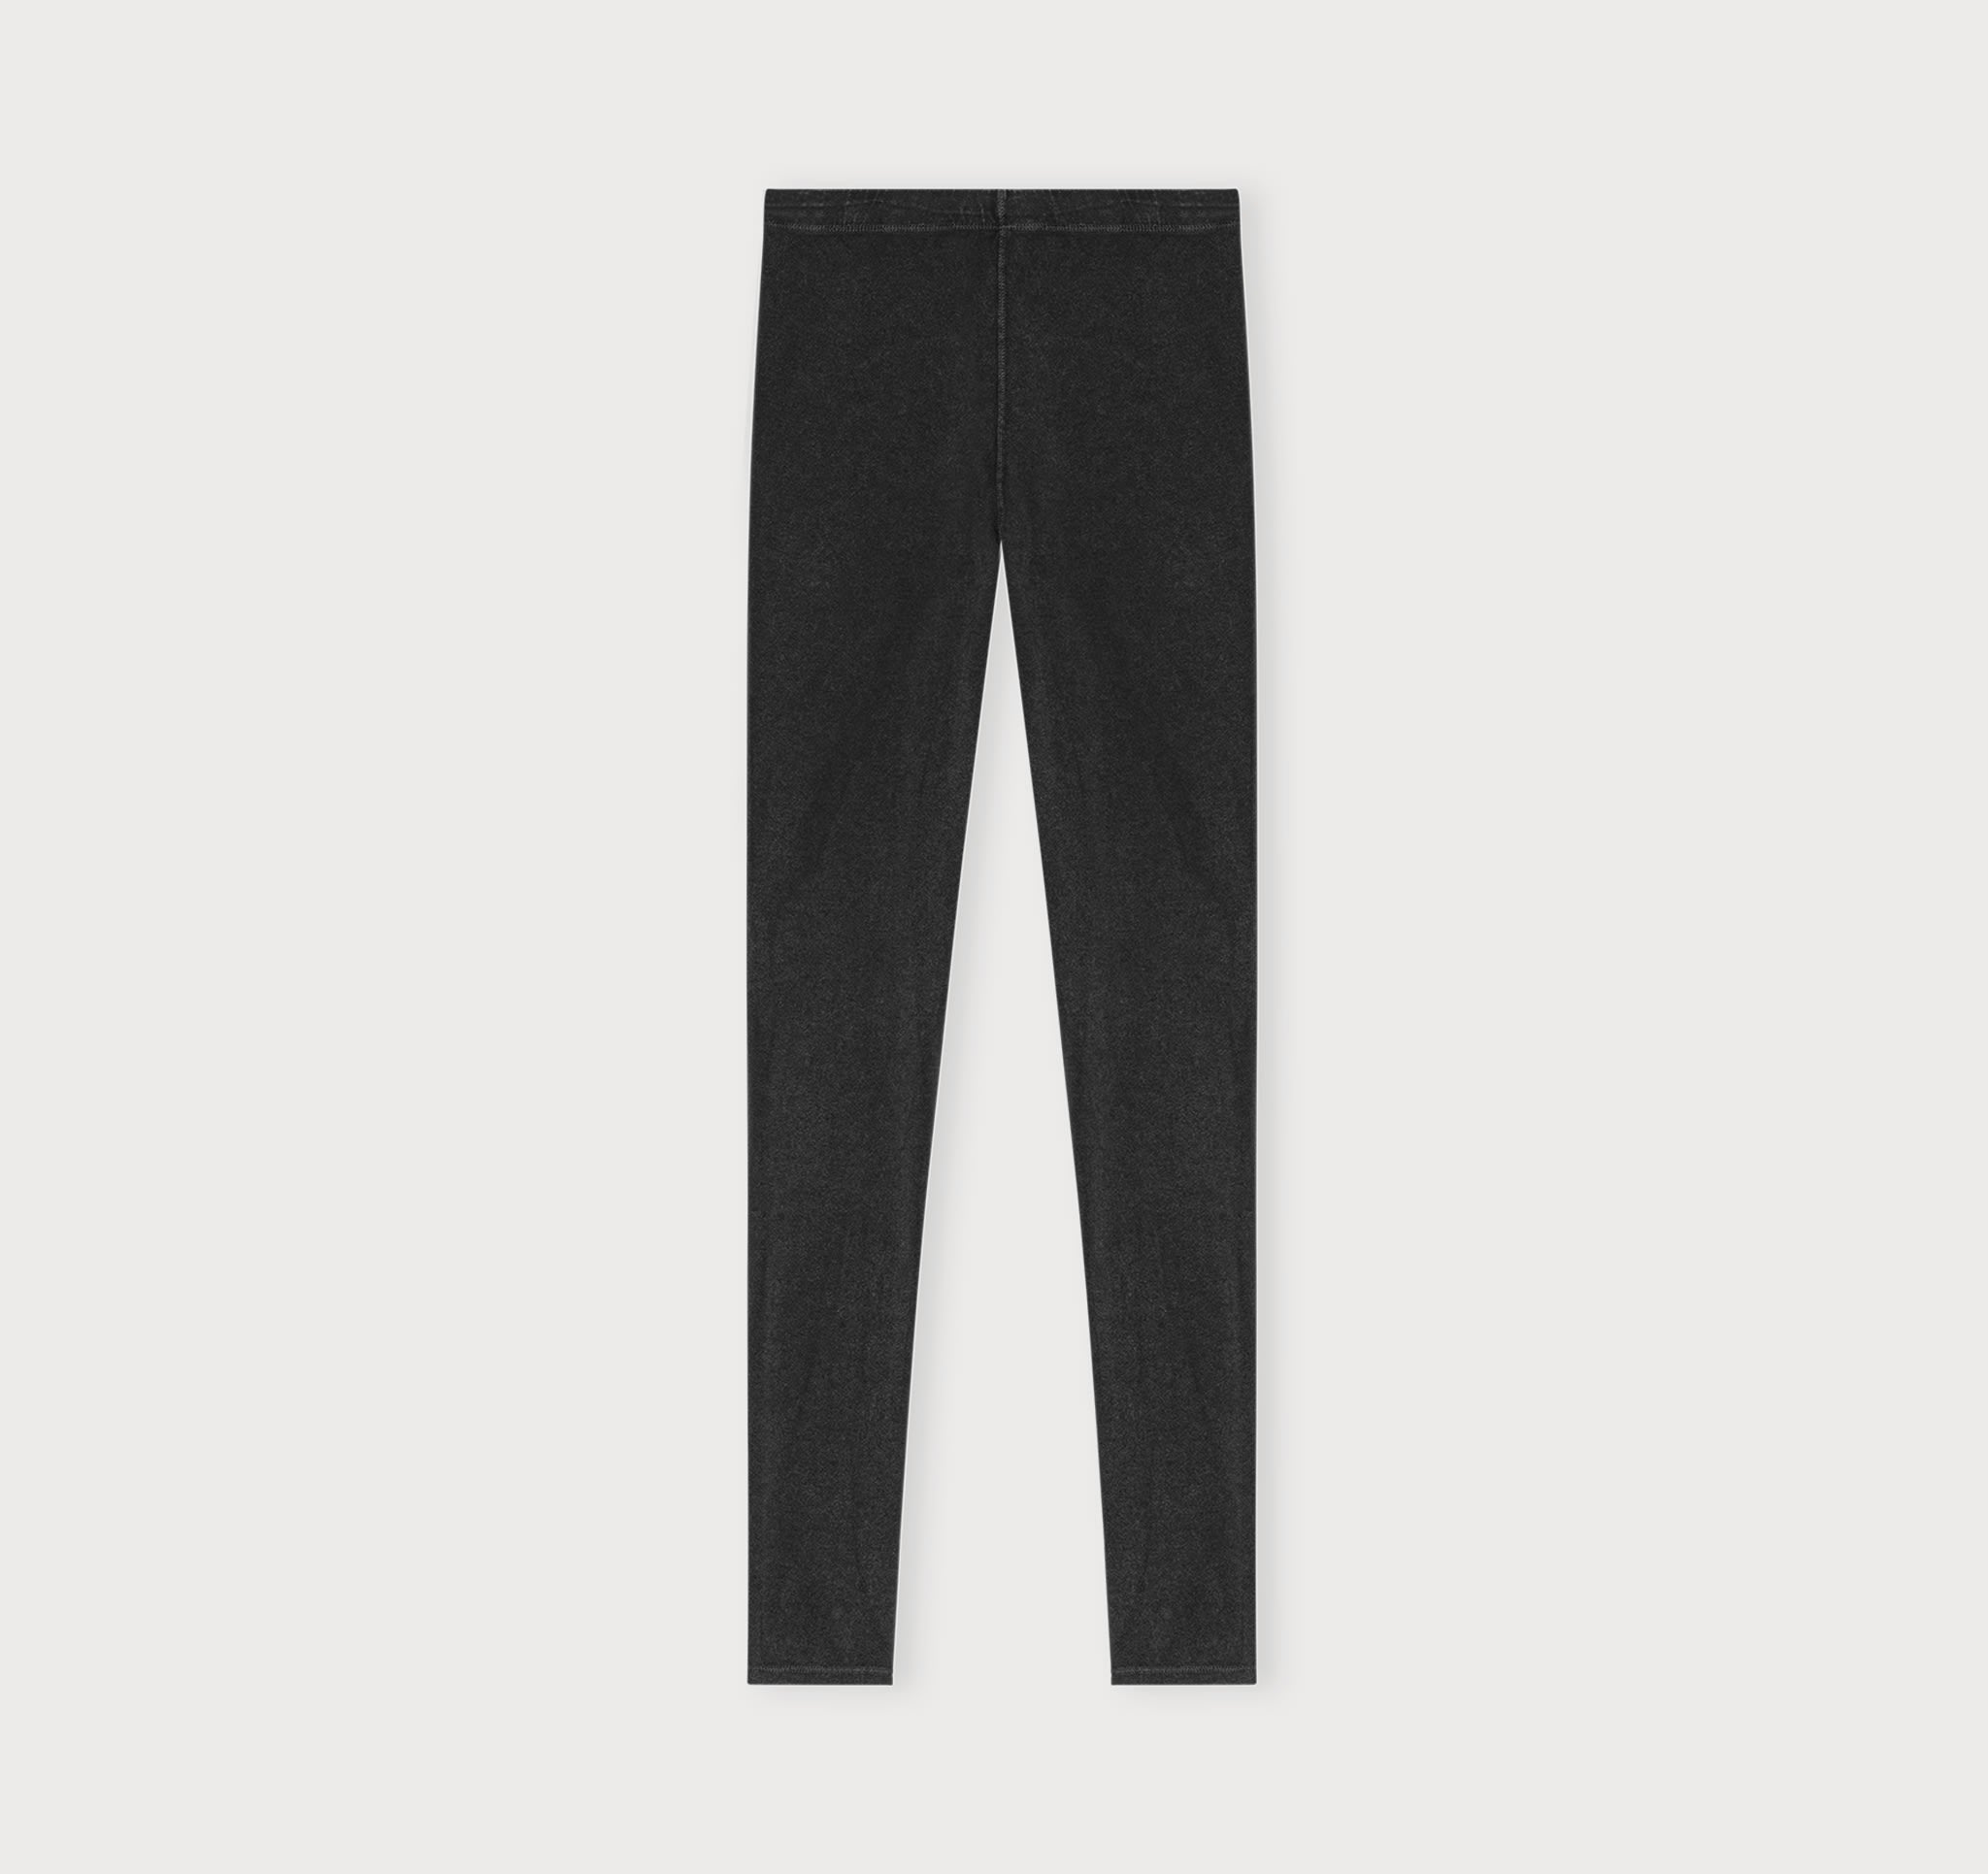 Zara | Pants & Jumpsuits | Zara Basic High Waisted Leggings | Poshmark